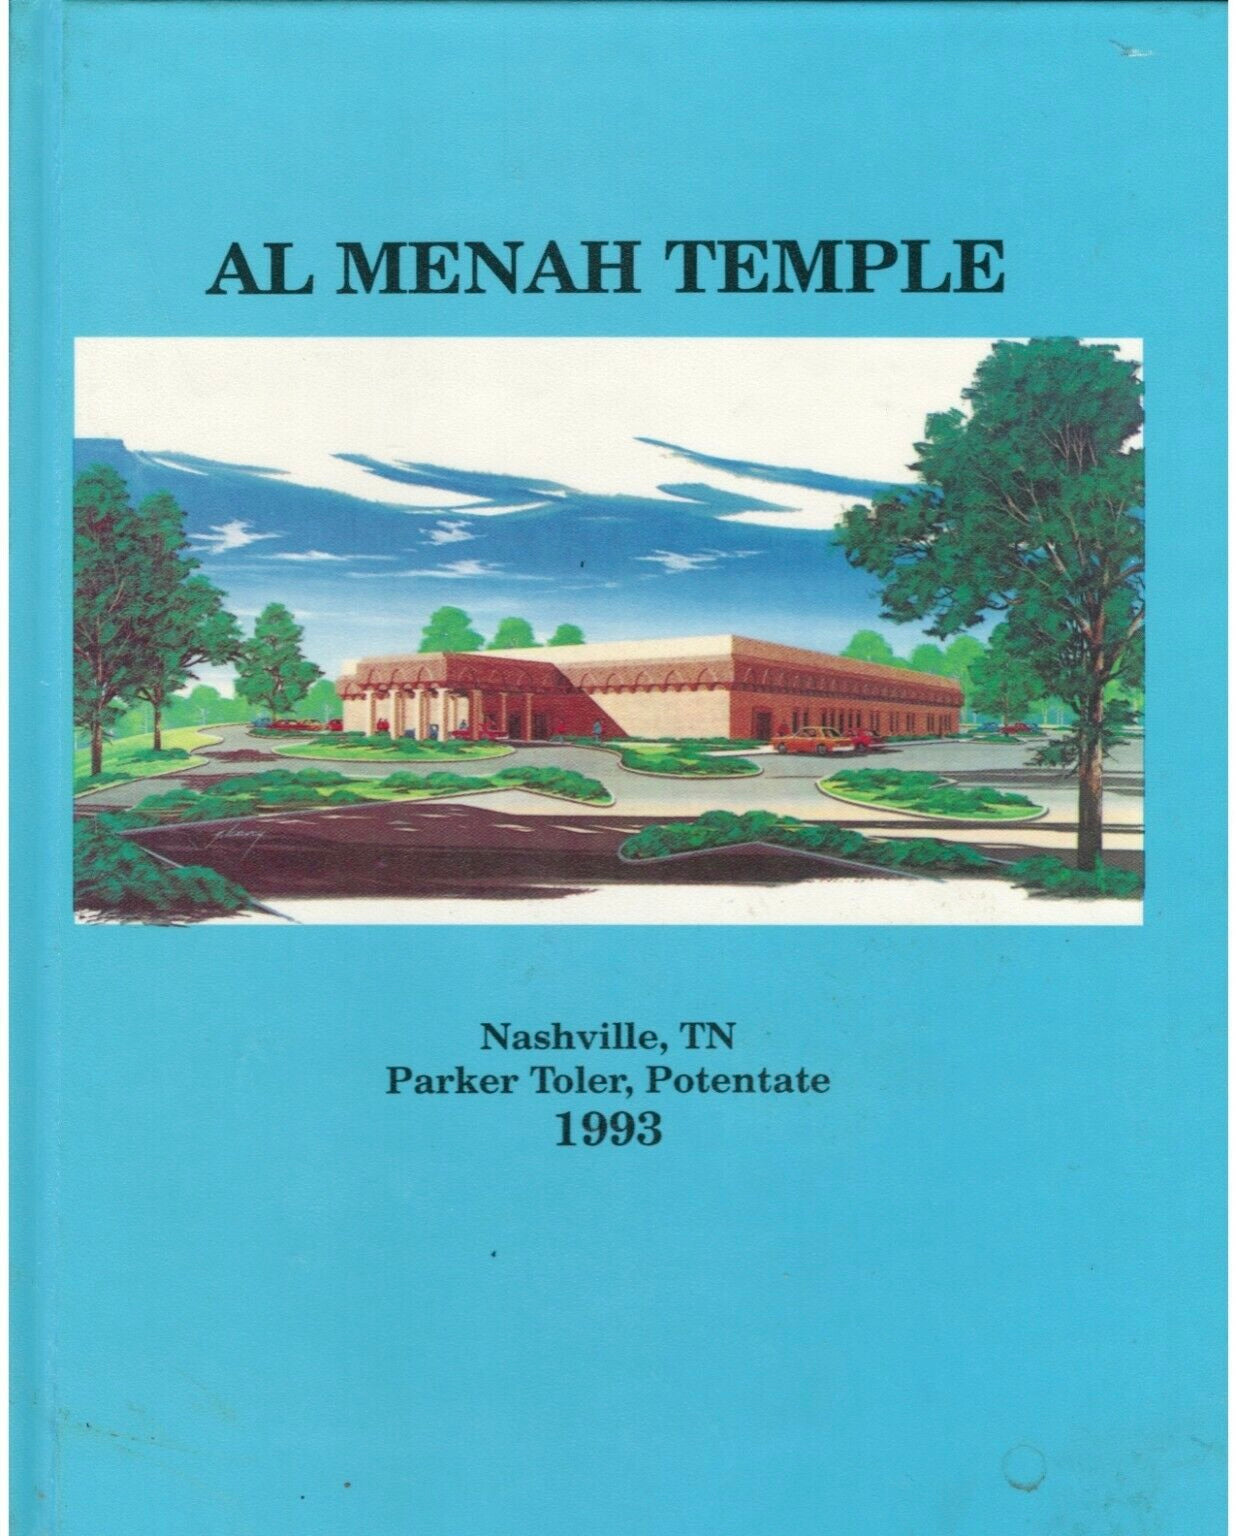 Al-Menah Temple - Nashville TN; Parker Toler, Potentate - 1993